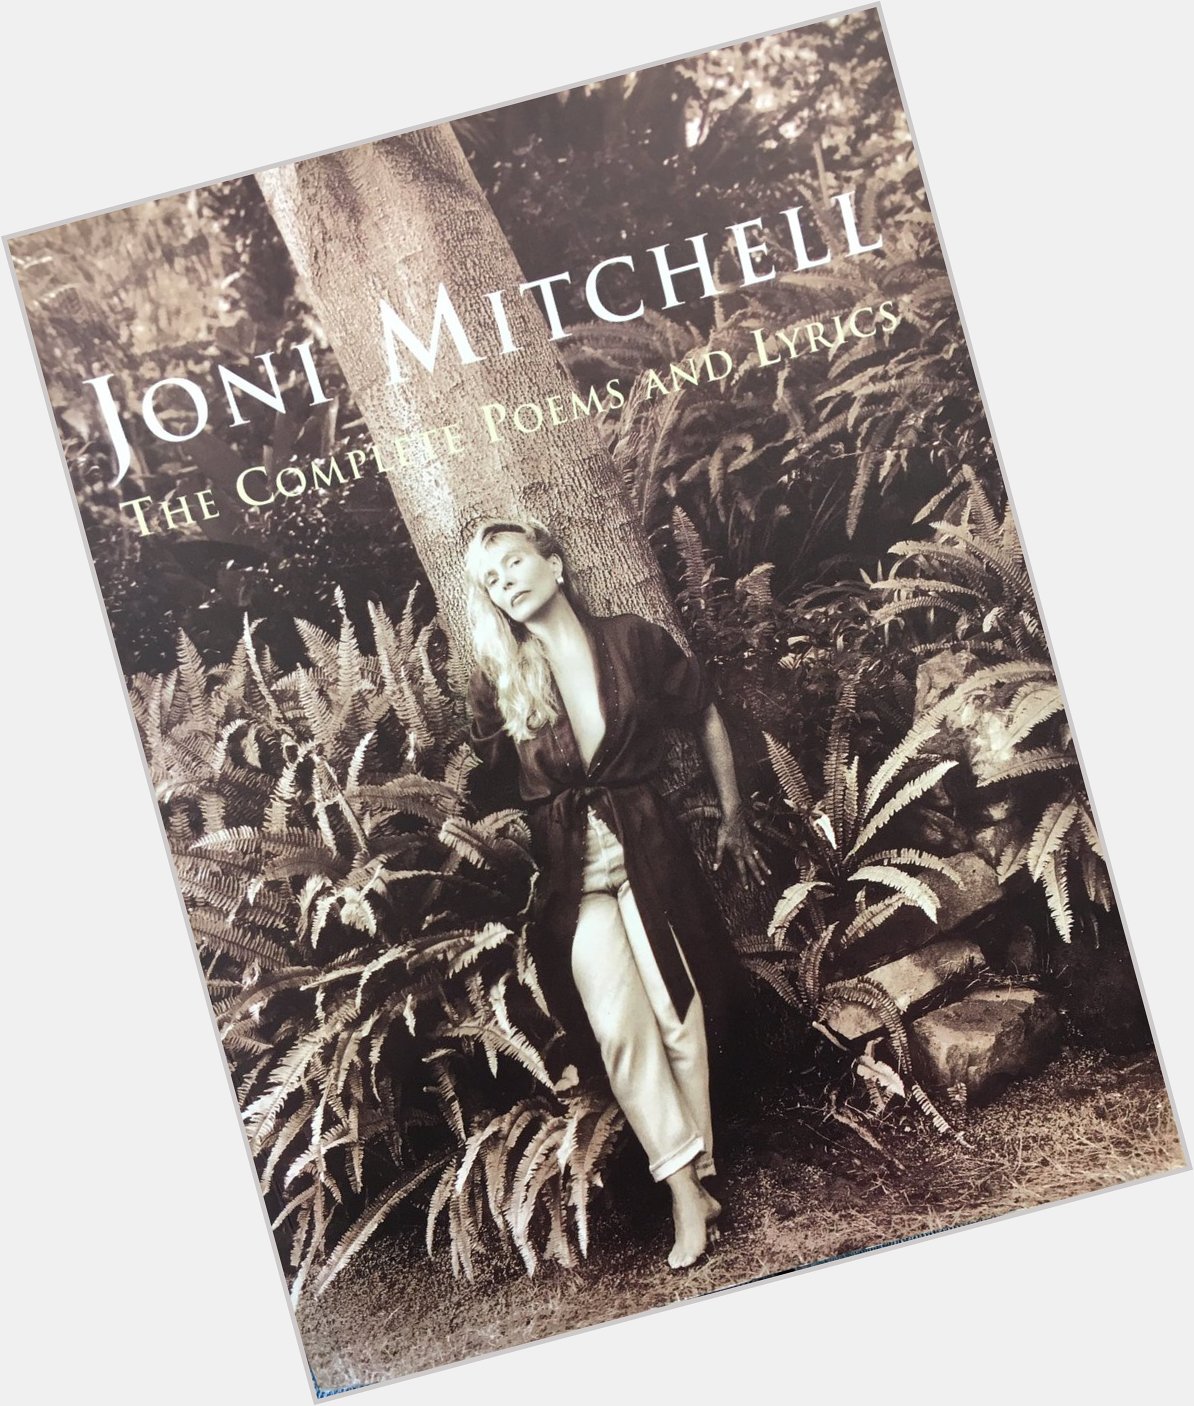 Happy birthday to Joni Mitchell, 74 today and a master lyricist 